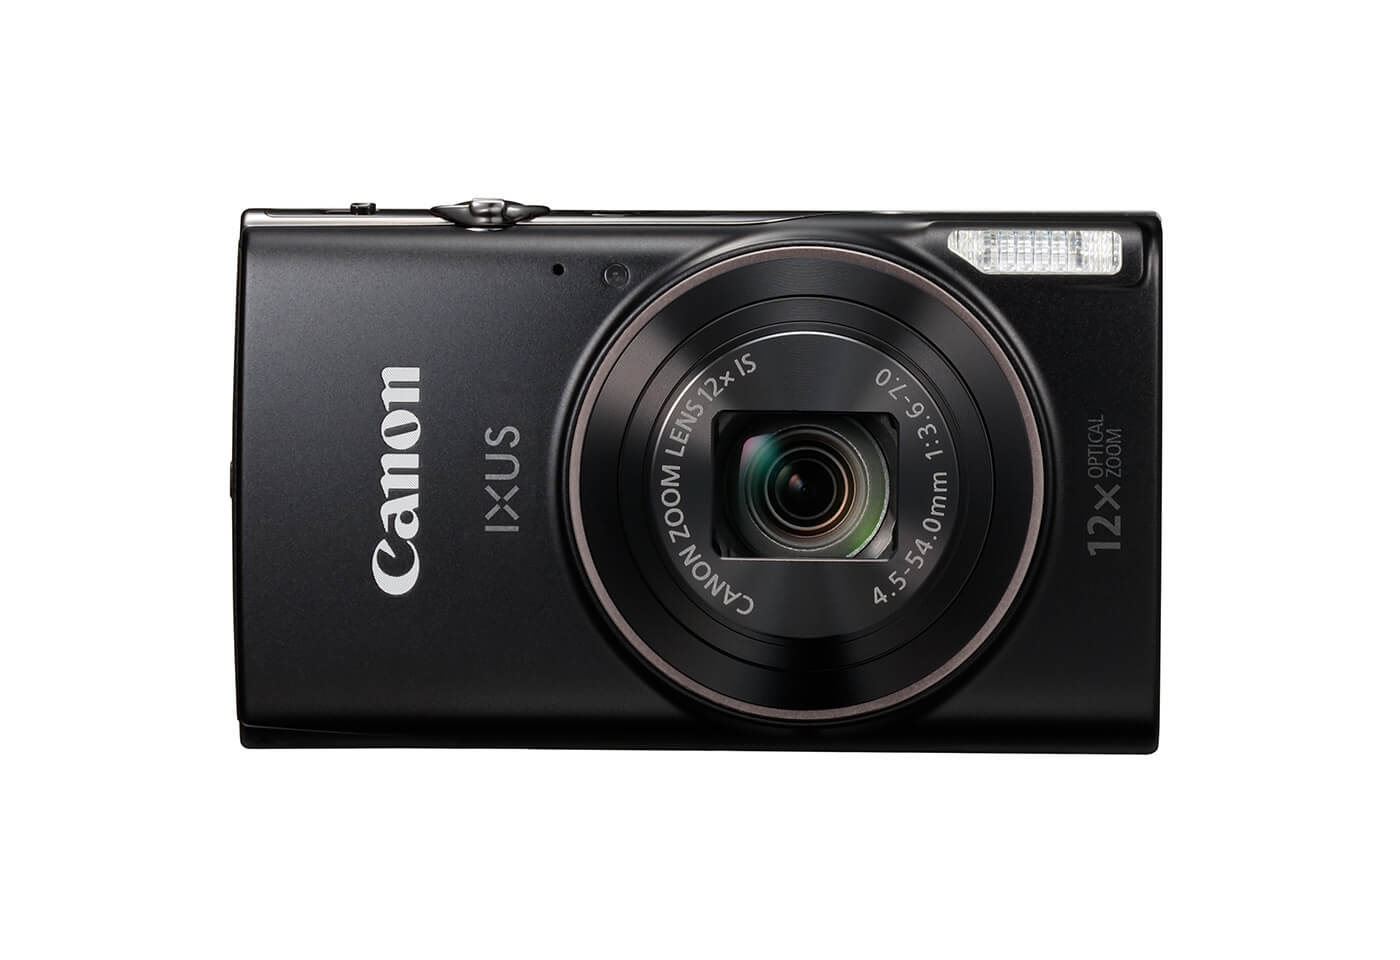 canon digital camera ixus